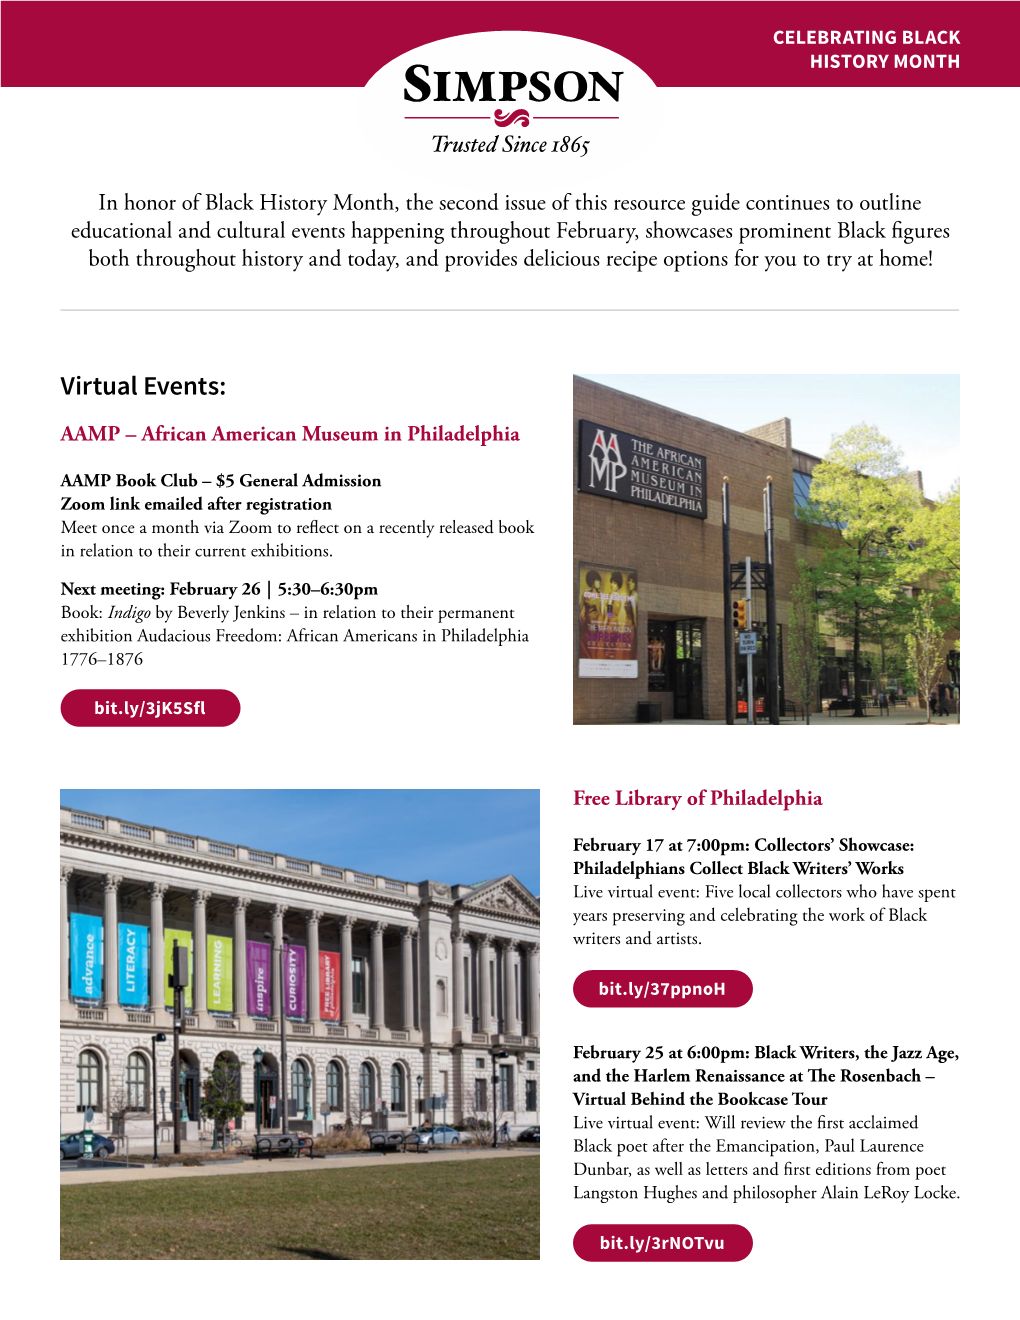 Virtual Events: AAMP – African American Museum in Philadelphia